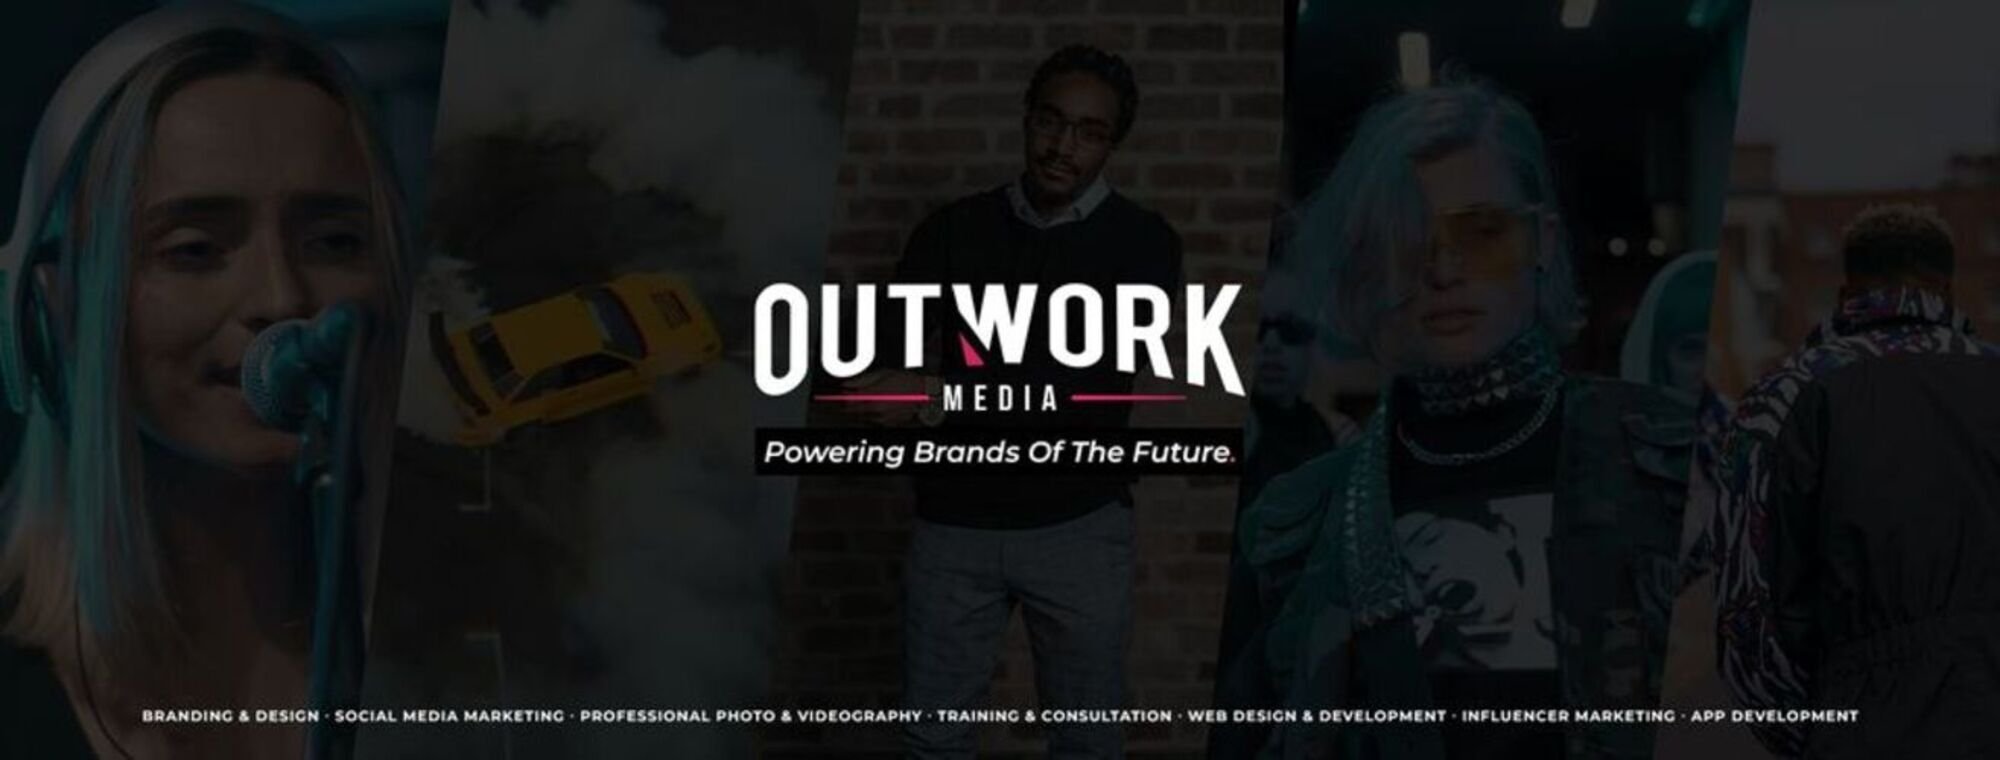 Outwork Media cover